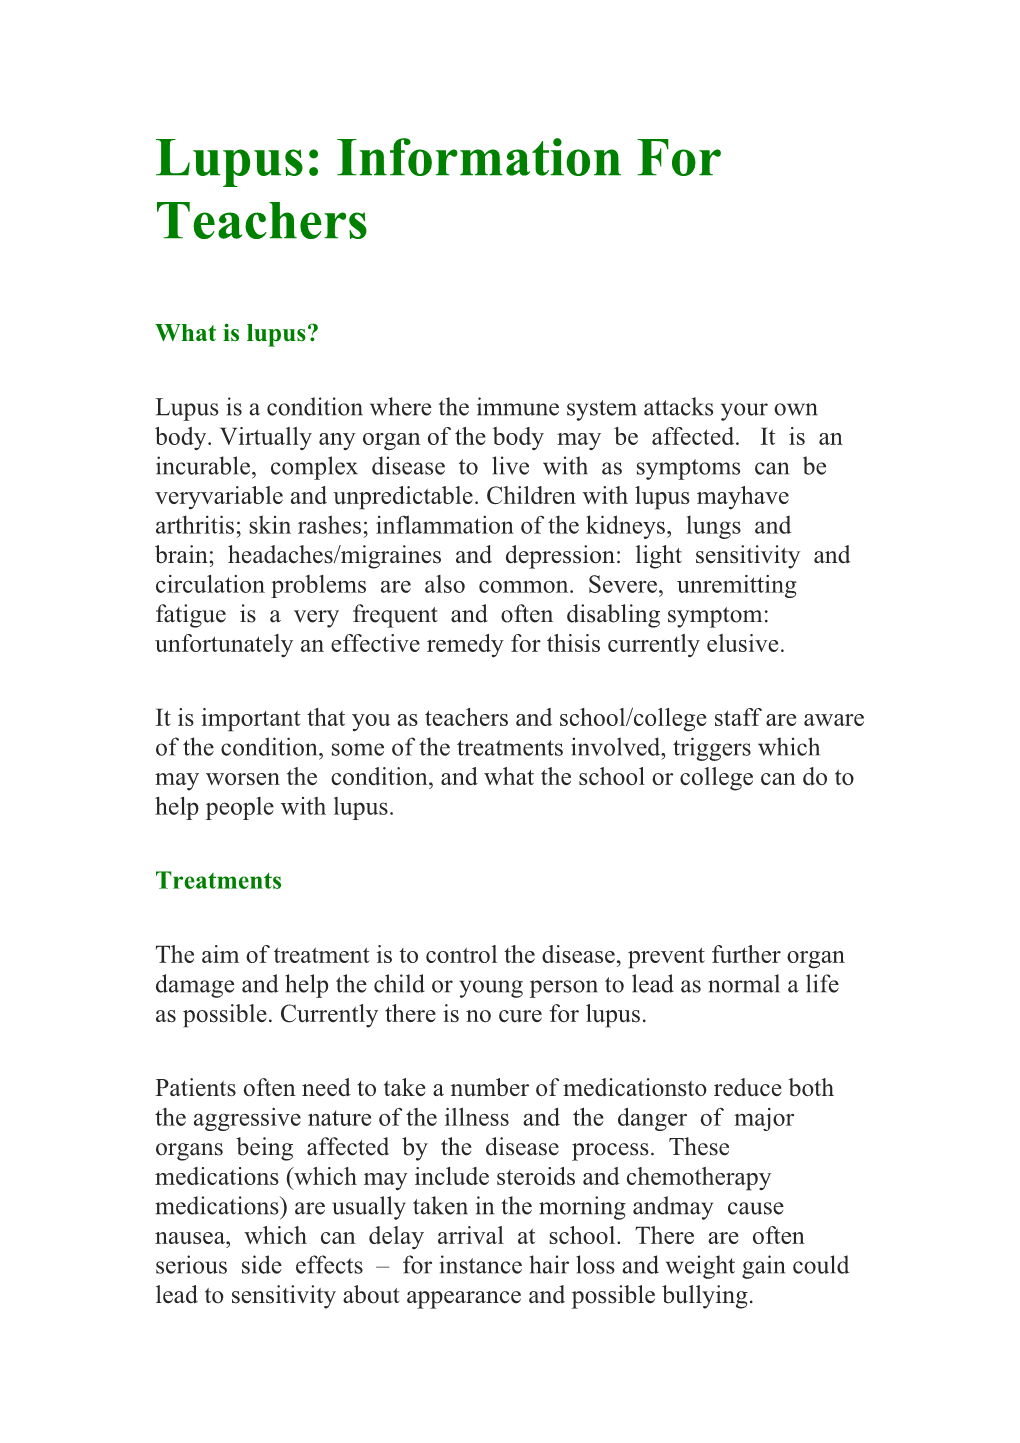 Lupus: Information for Teachers